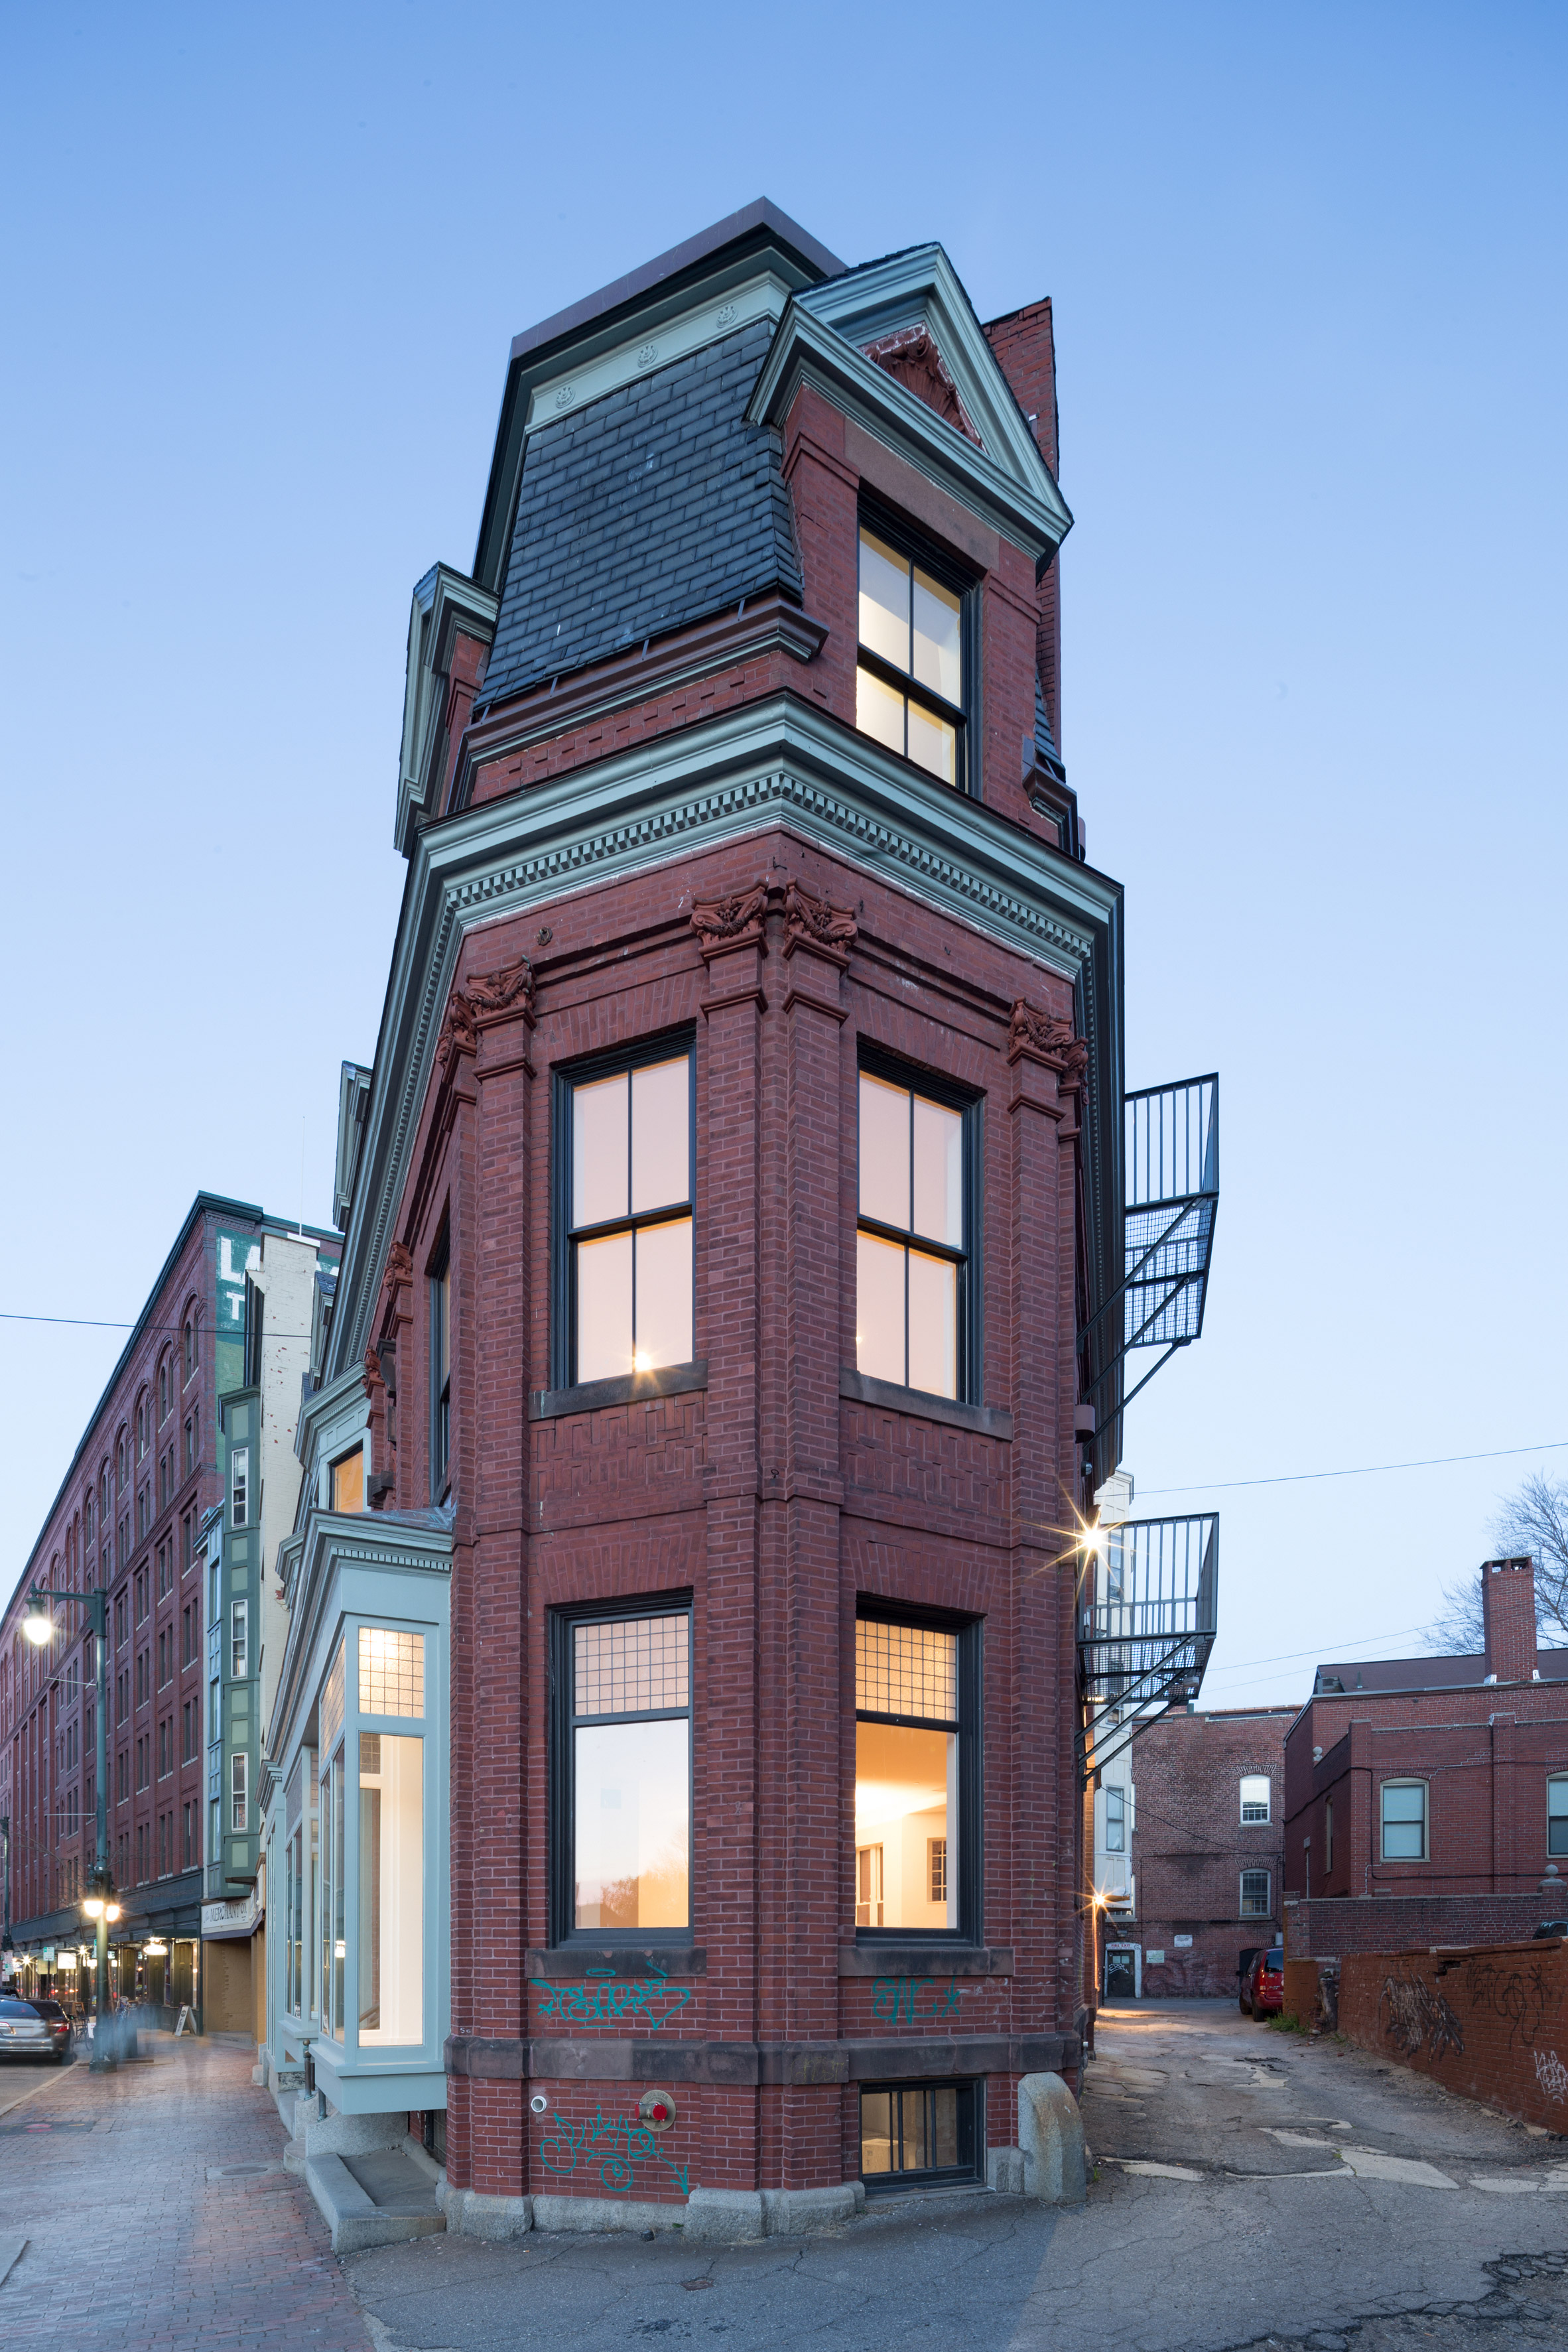 Design News: Present Architecture Restores Historic Maine Building